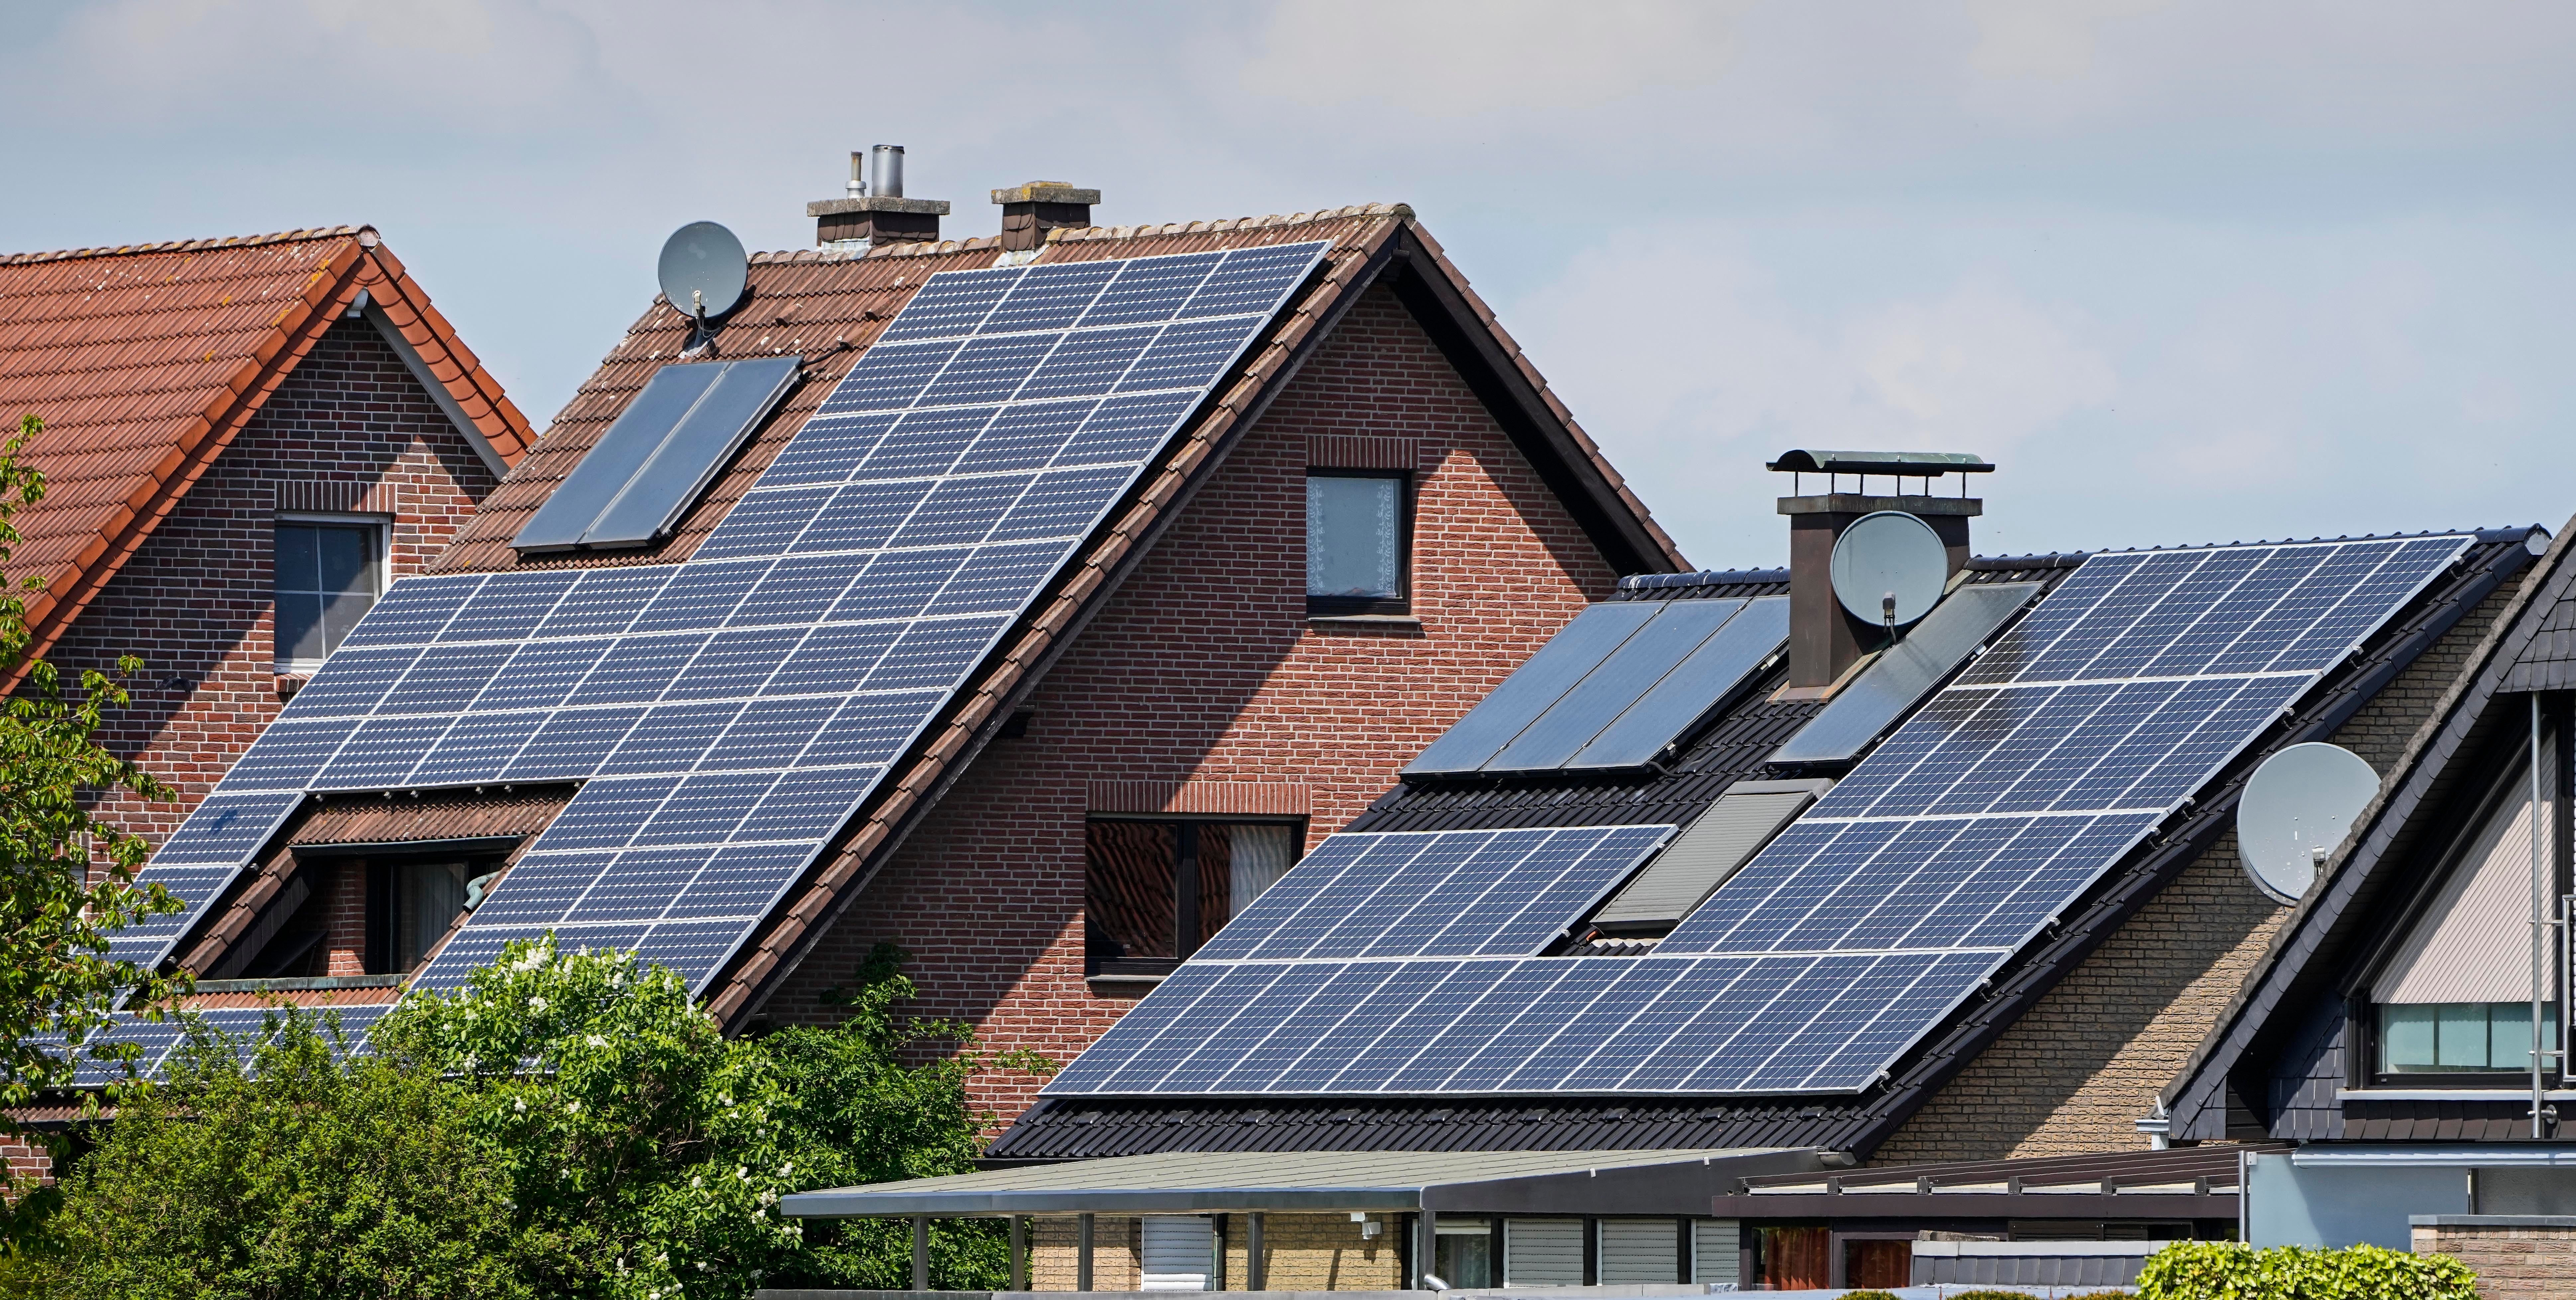 Solar panelled homes